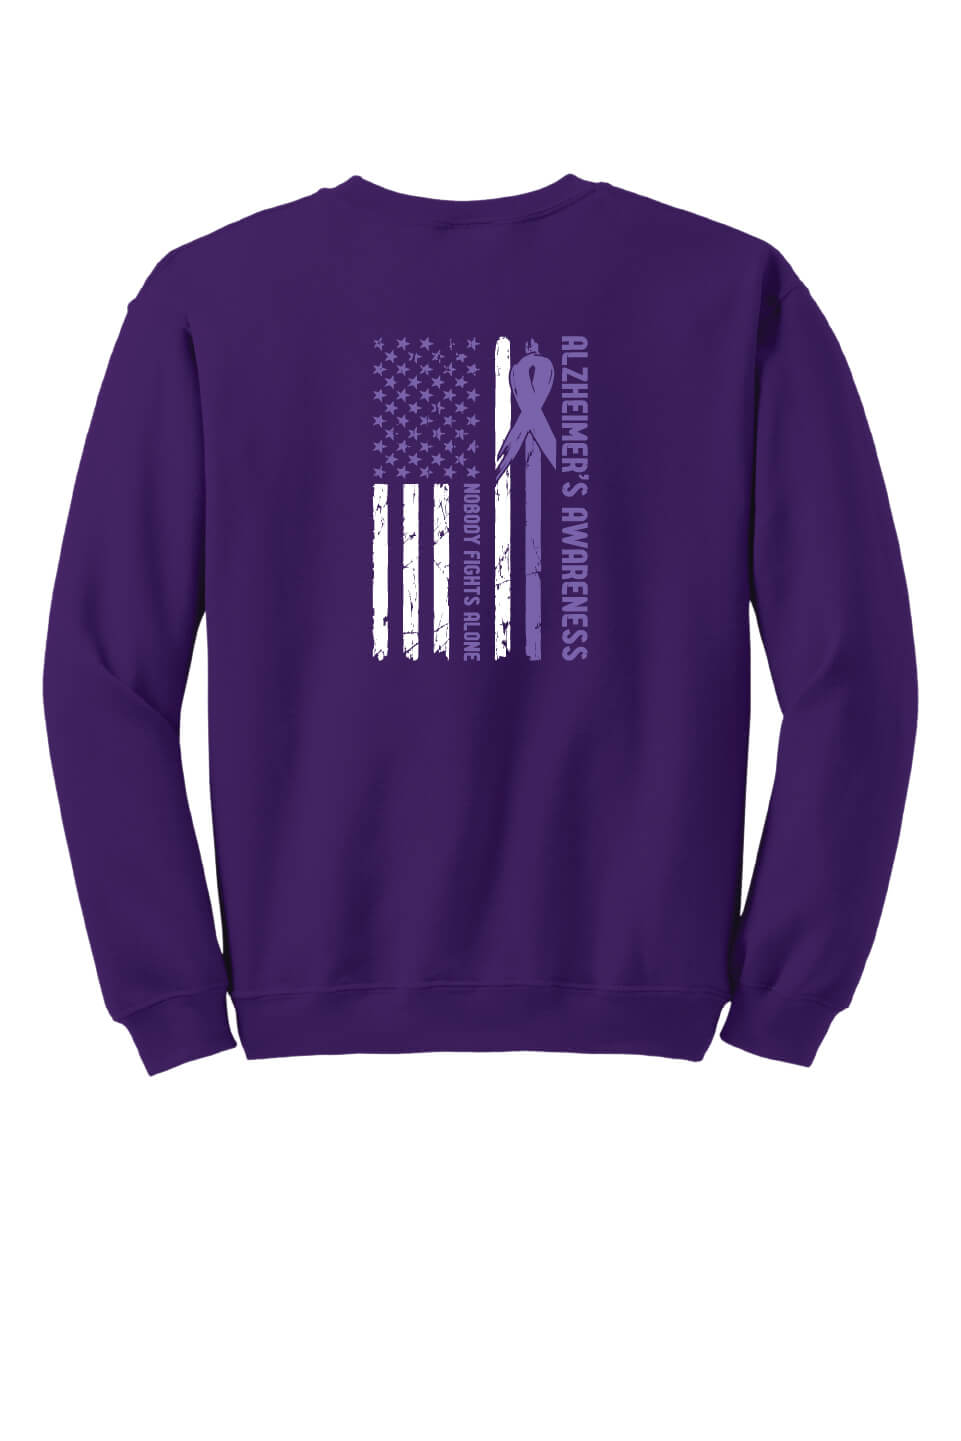 Memories Matter Flag Back Crewneck Sweatshirt purple flag back